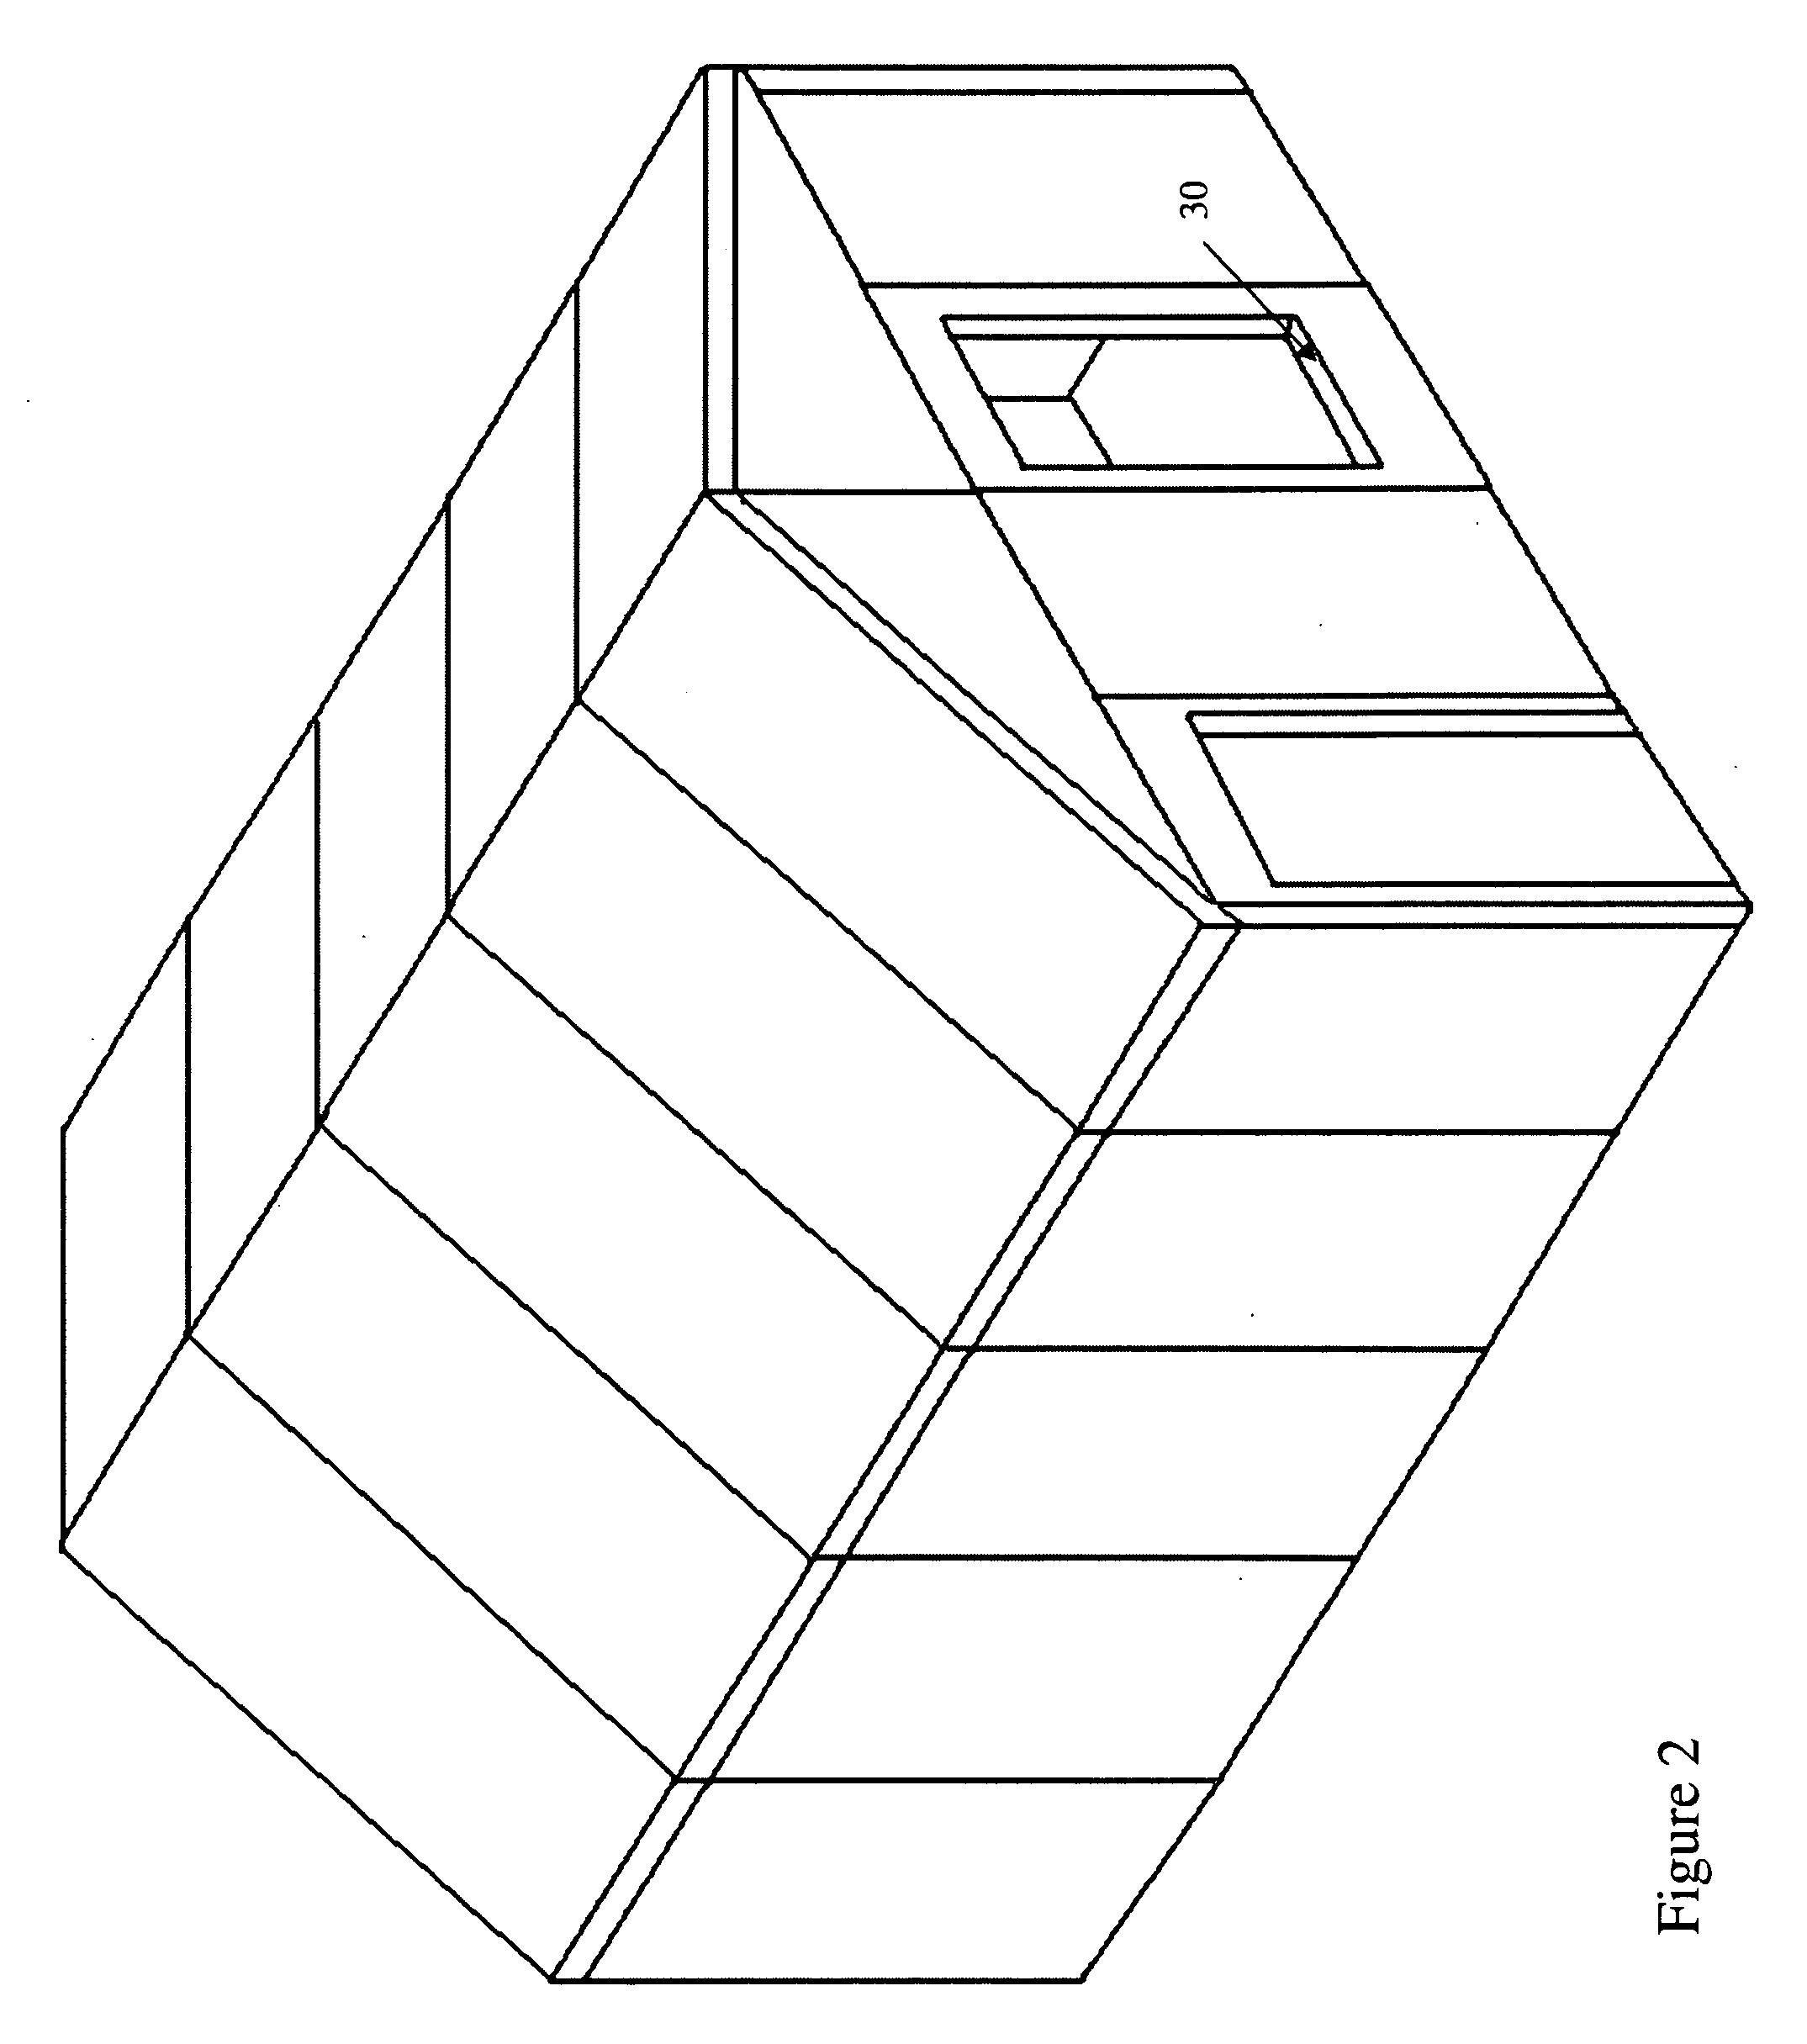 Structural Building Panels with Multi-Laminate Interlocking Seams